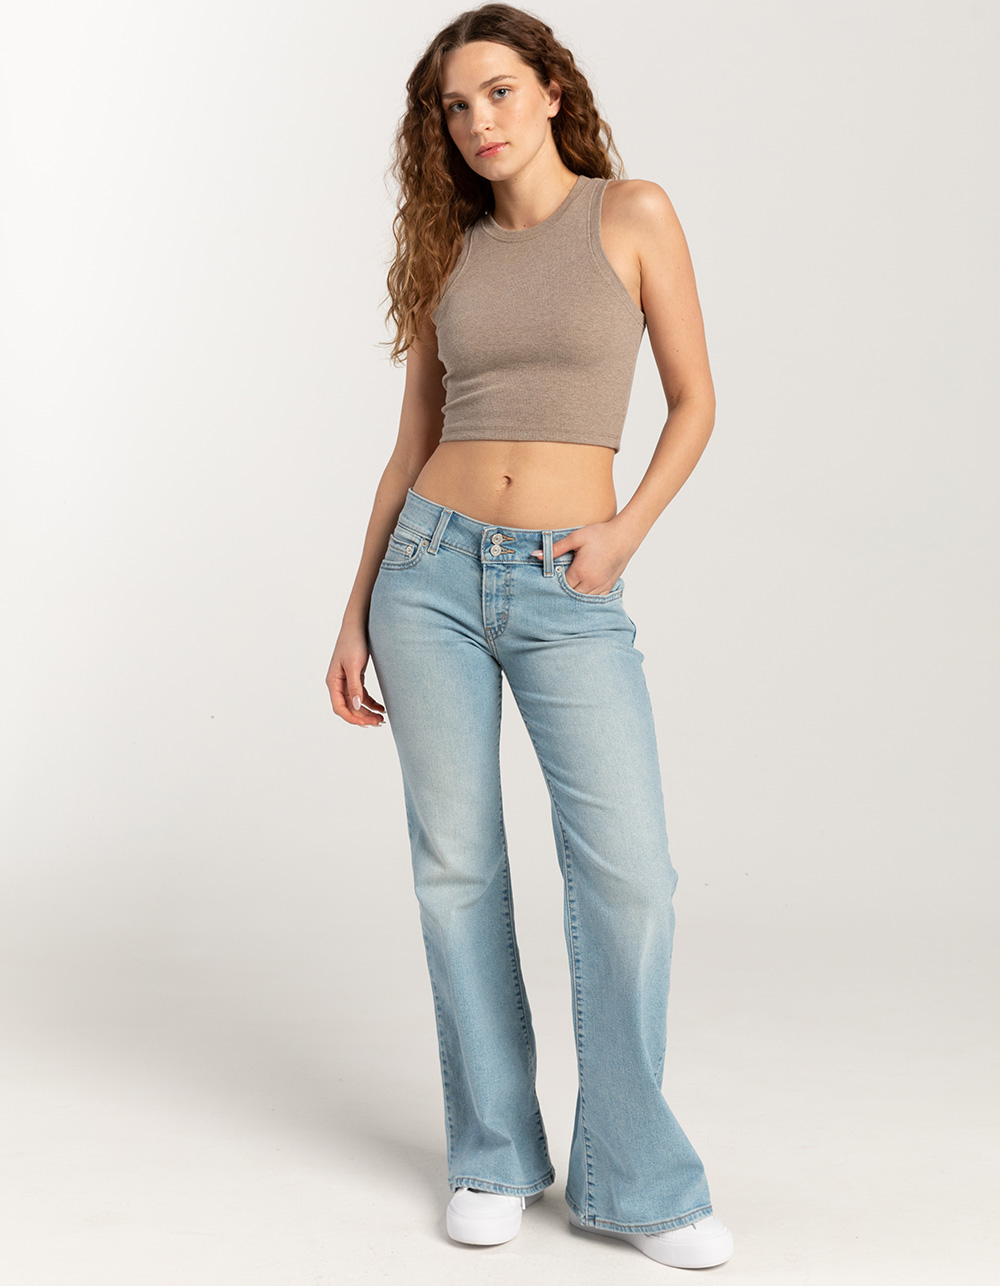 Superlow Flare Women's Jeans - Medium Wash